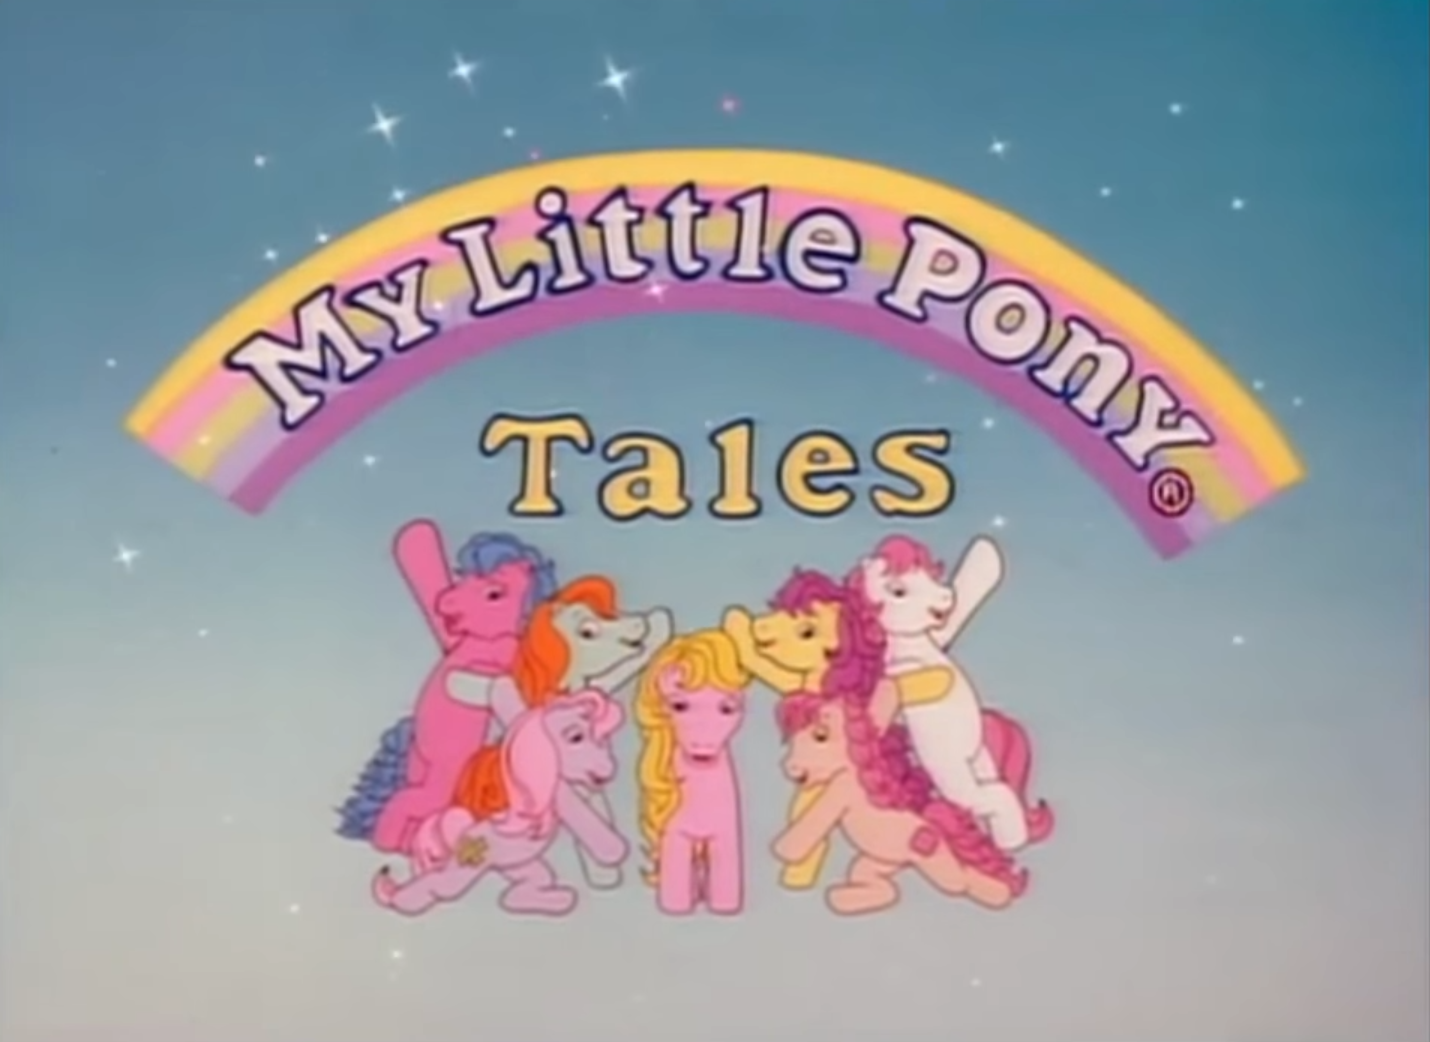 My little pony tales. My little Pony 1992. My little Pony and friends 1986 and my little Pony Tales 1992. My little Pony Tales 1982.